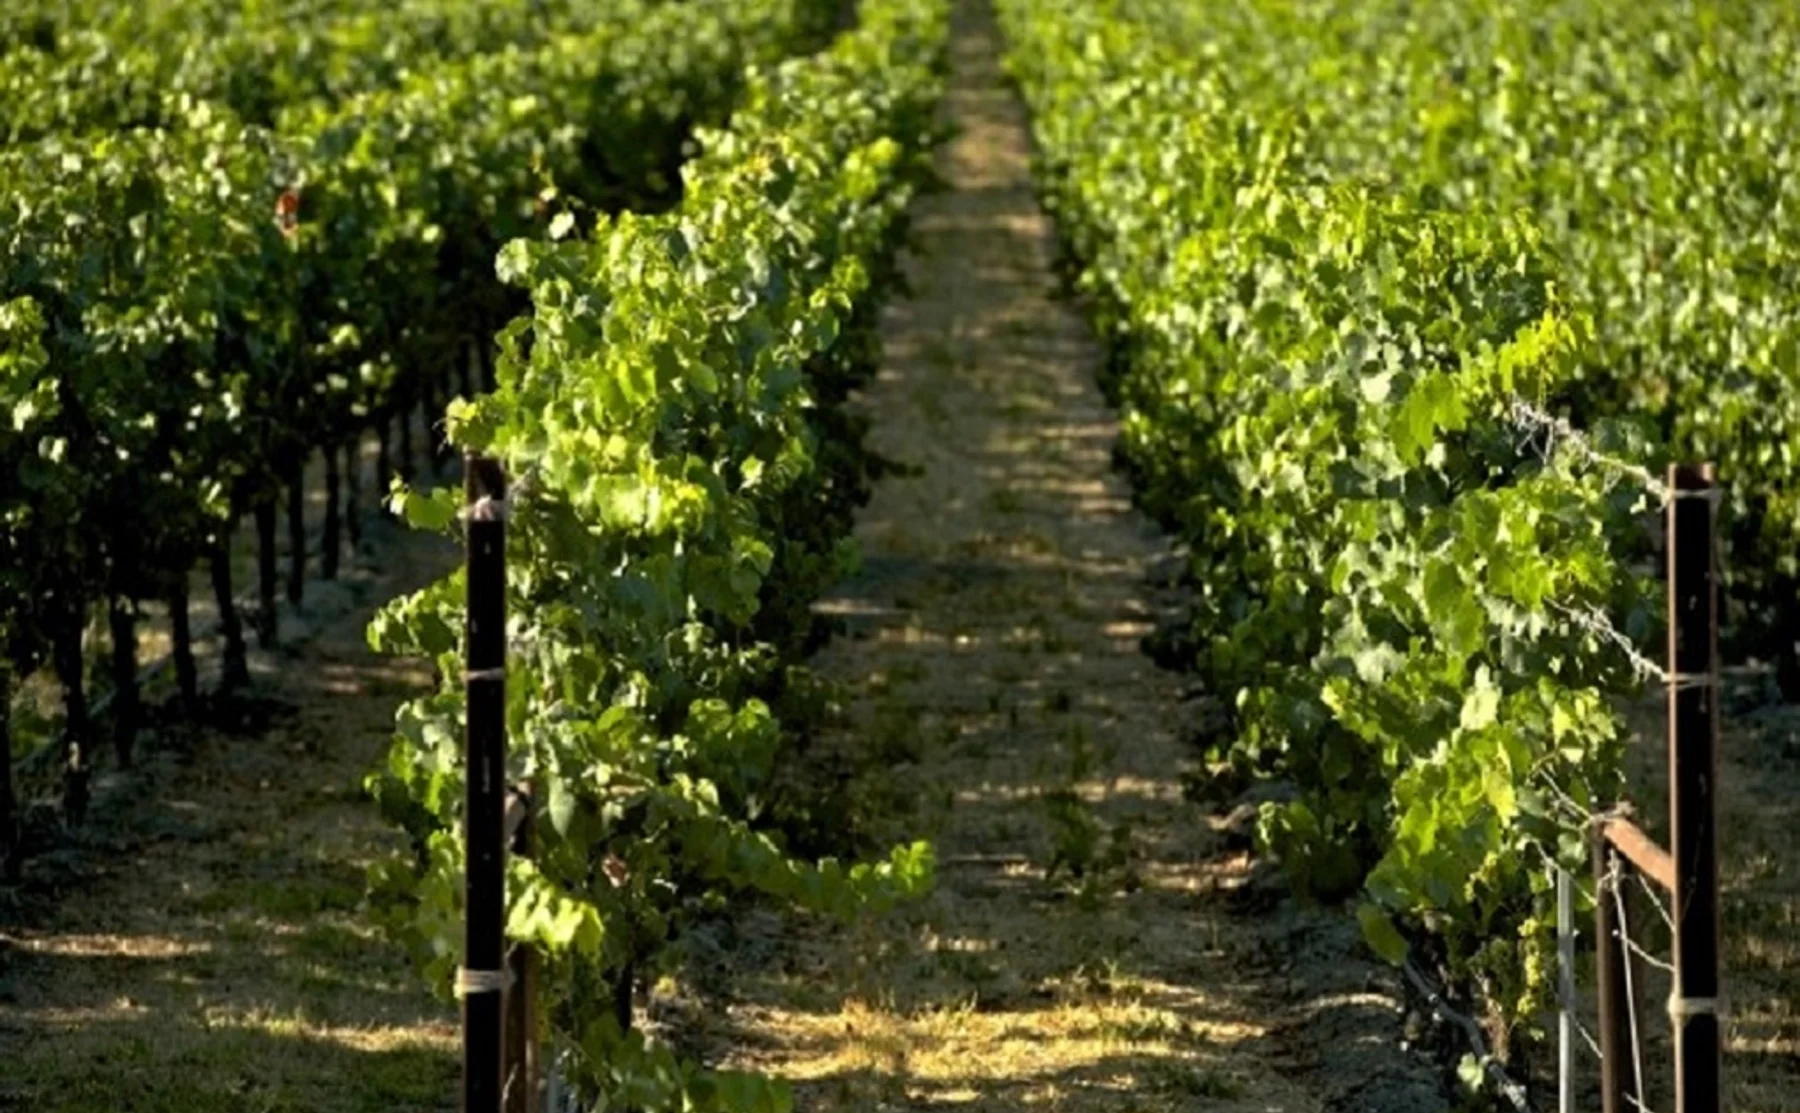 Wine cellar and vineyard tour with tasting at Campi Flegrei - 1392925